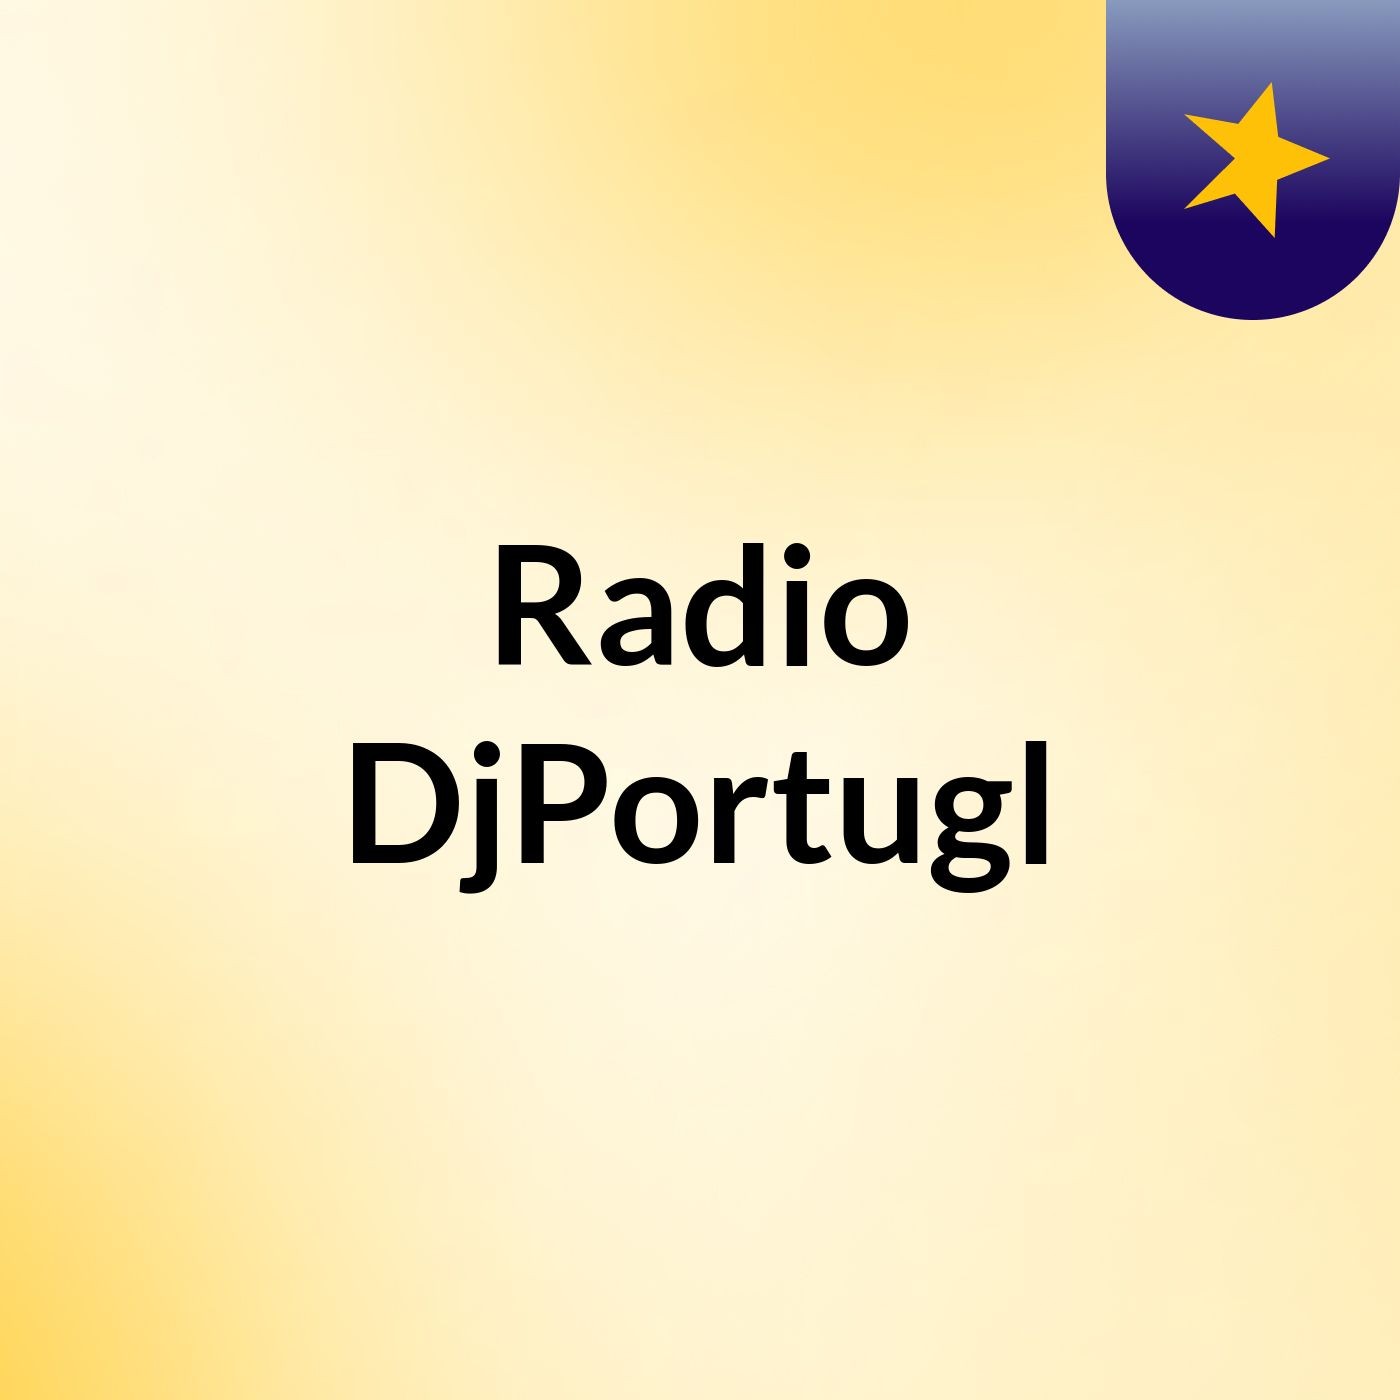 Radio DjPortugl